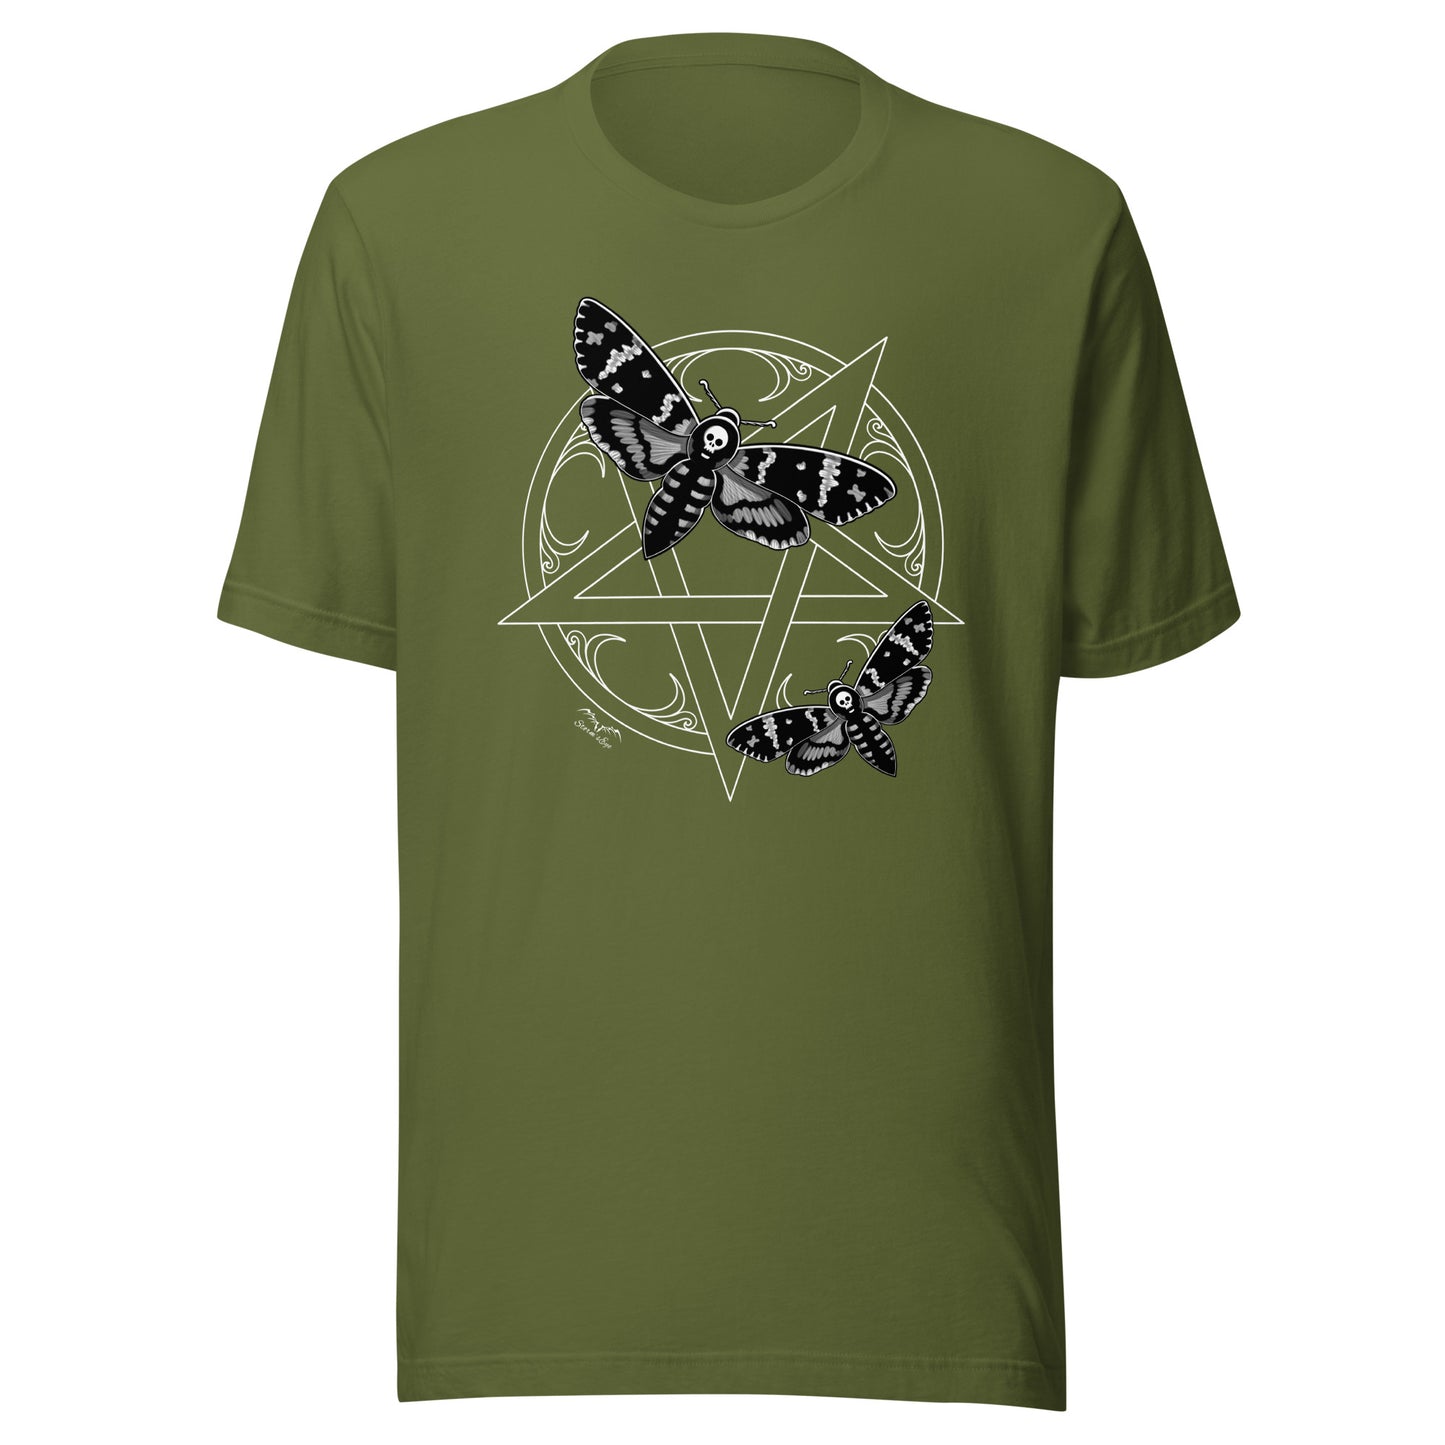 stormseye design deaths head moths pentagram T shirt flat view olive green